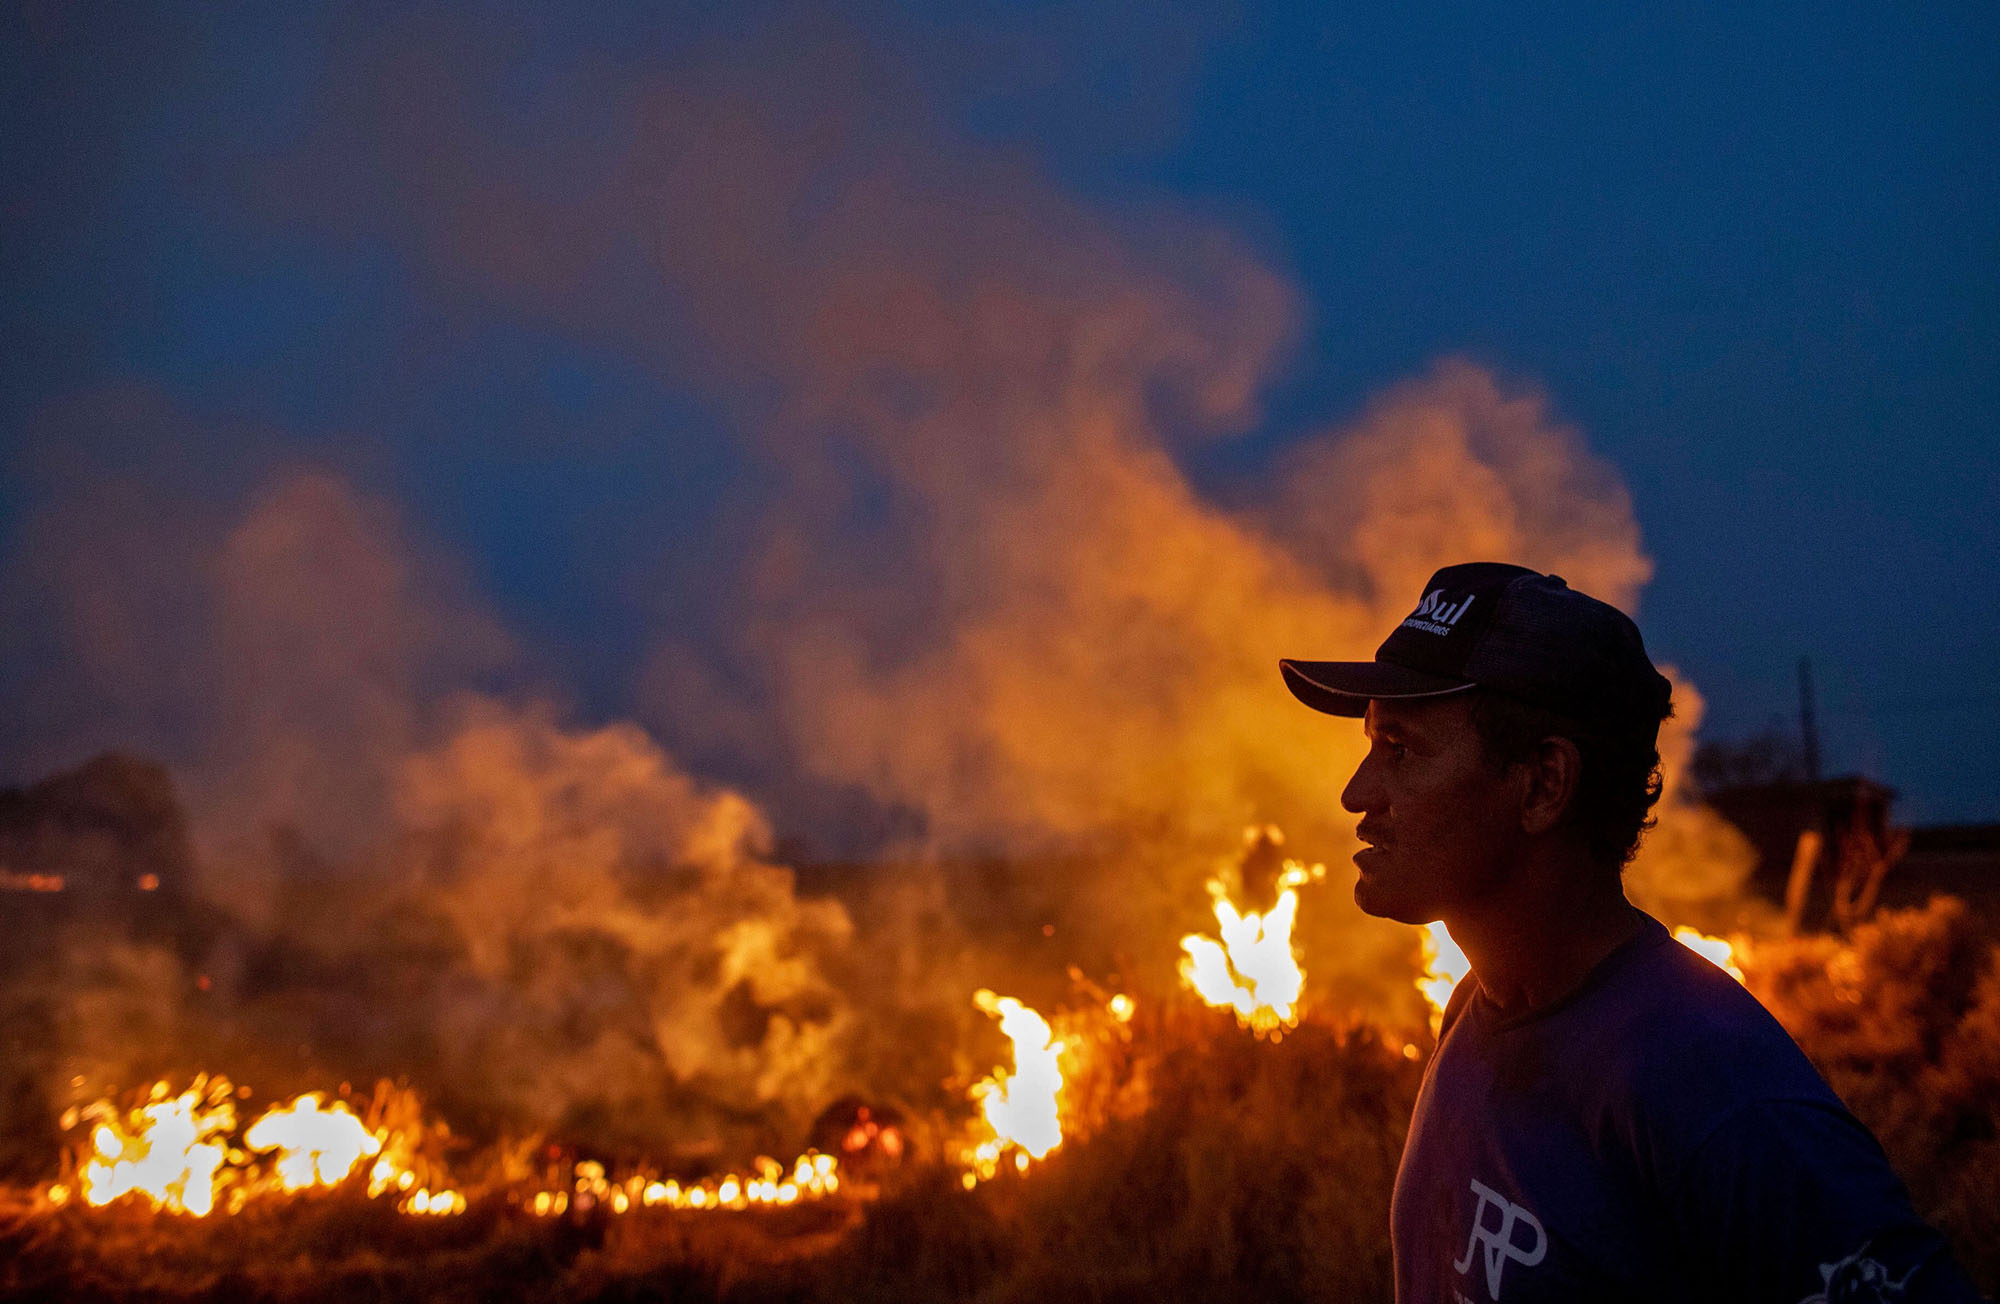 Photos: The Burning Amazon Rainforest - The Atlantic